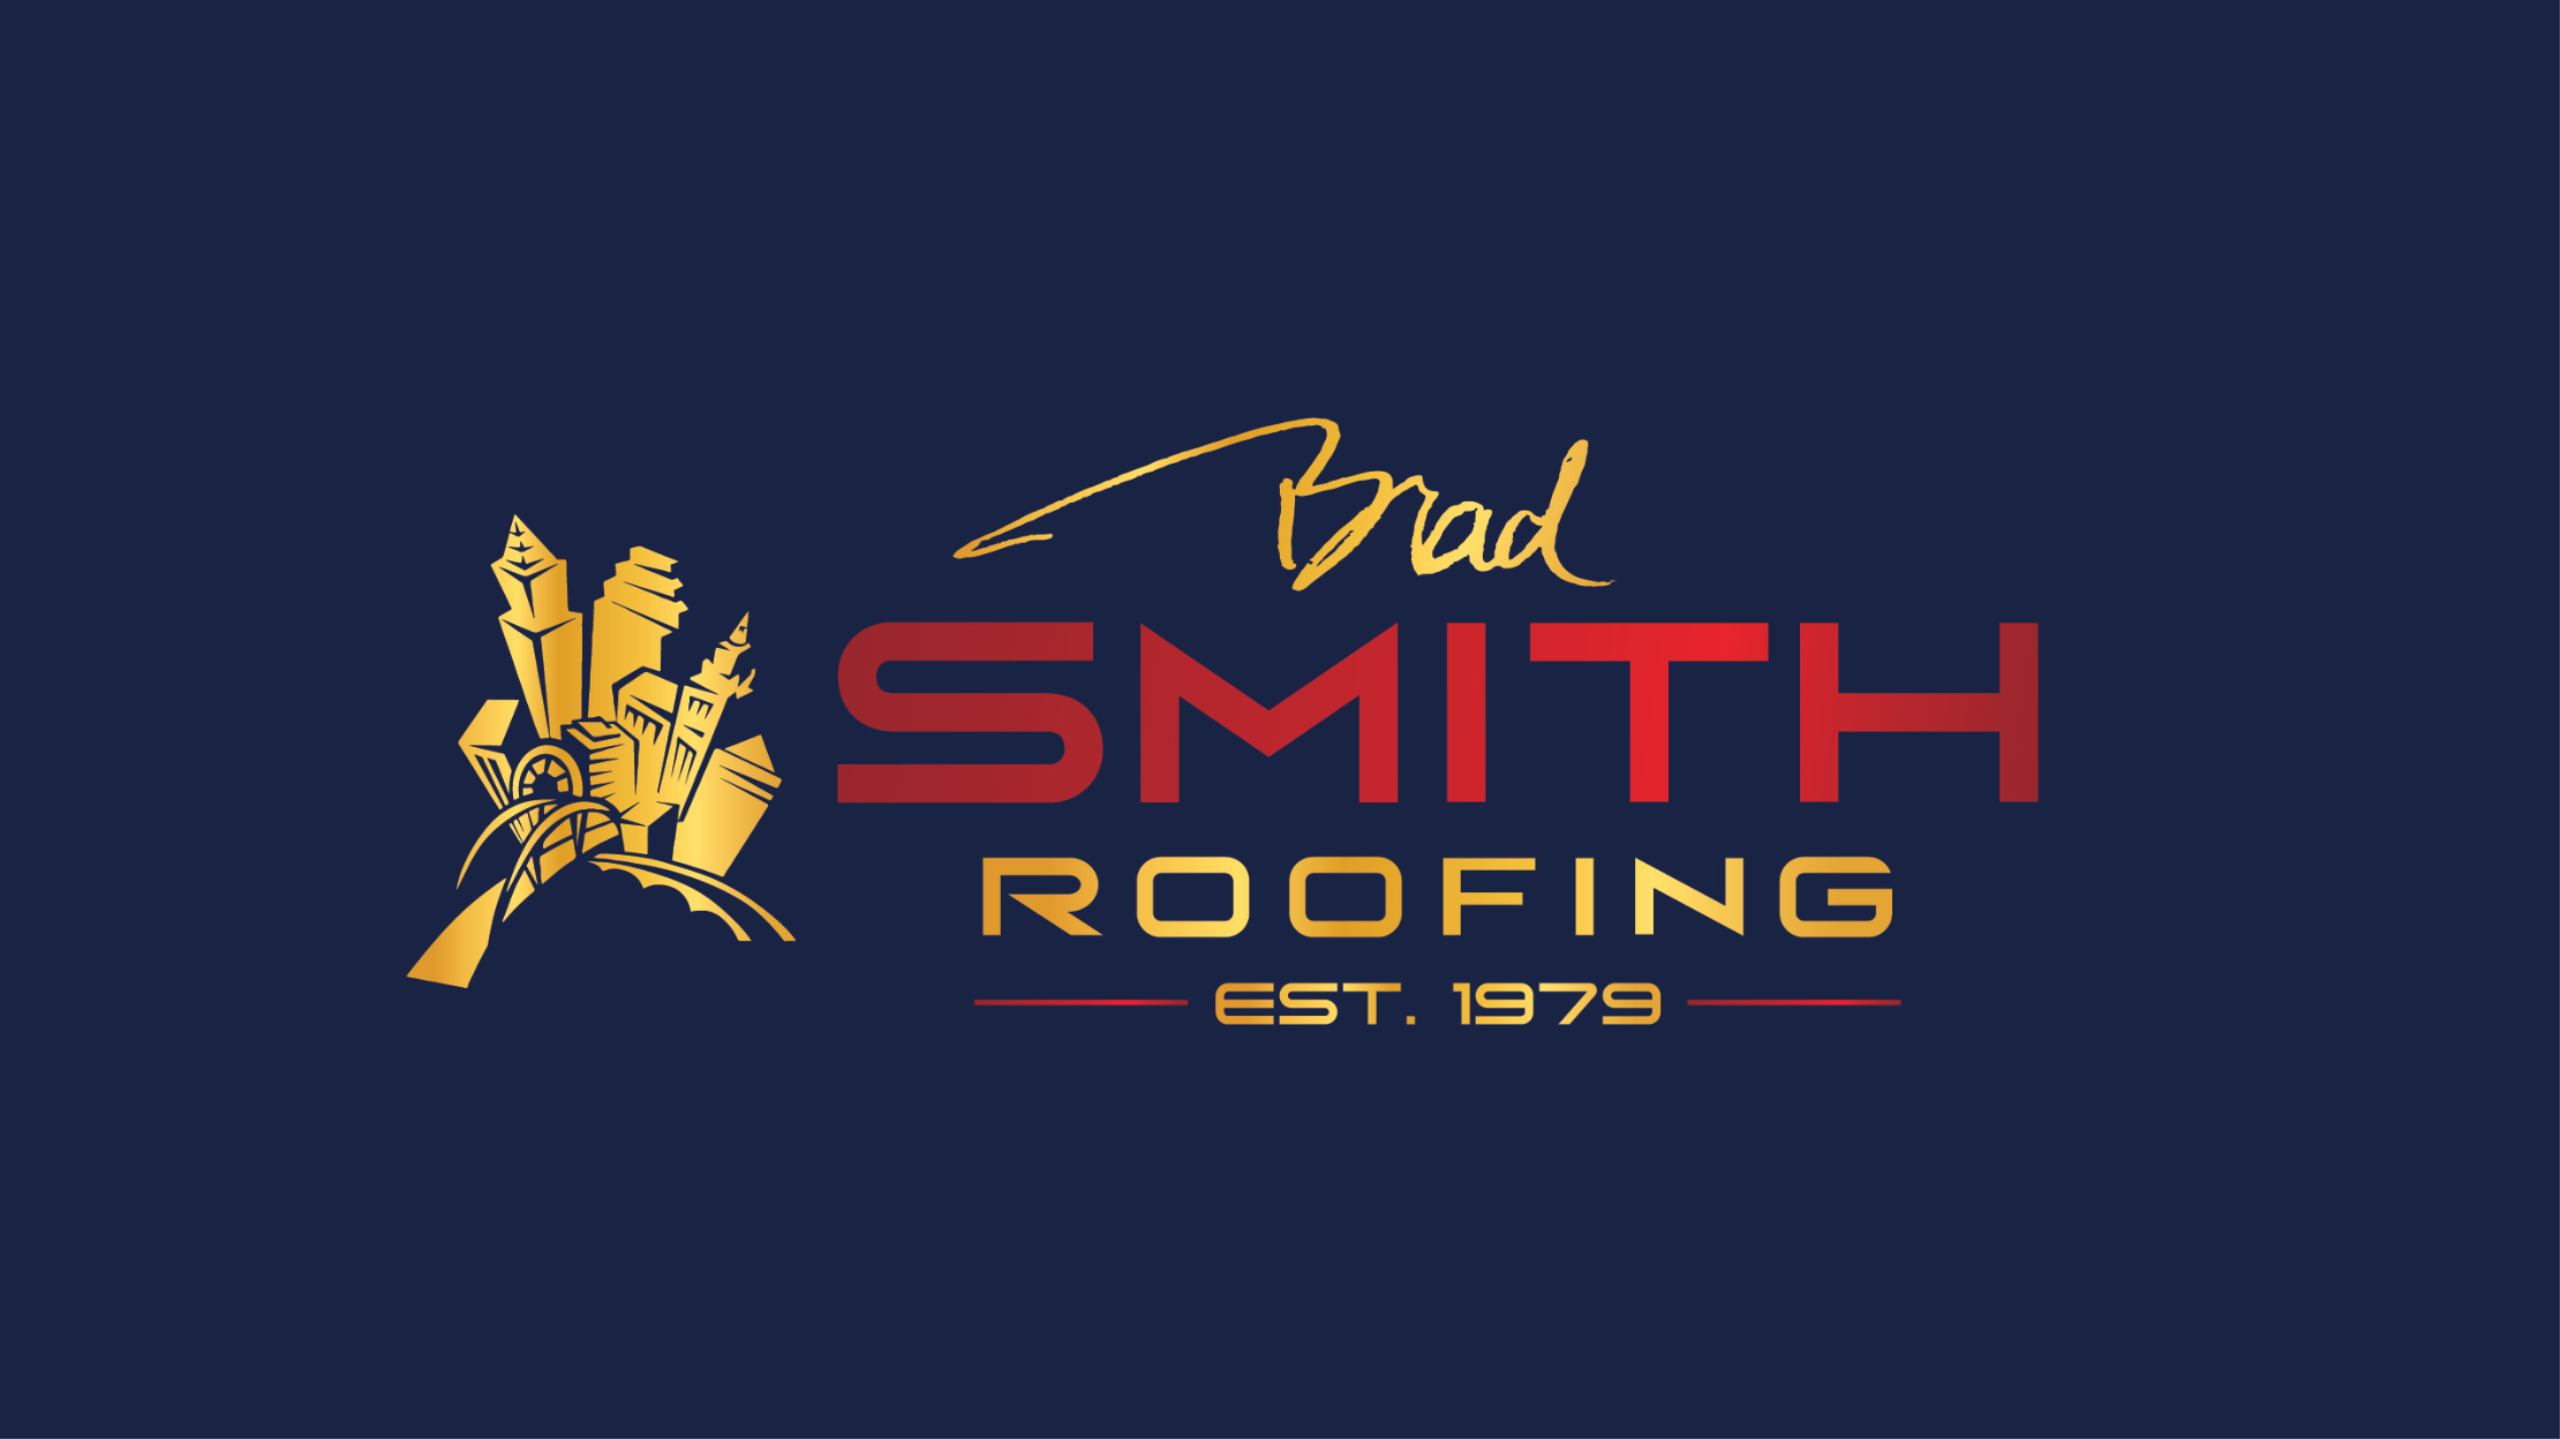 Brad Smith Roofing Co. Inc. Logo